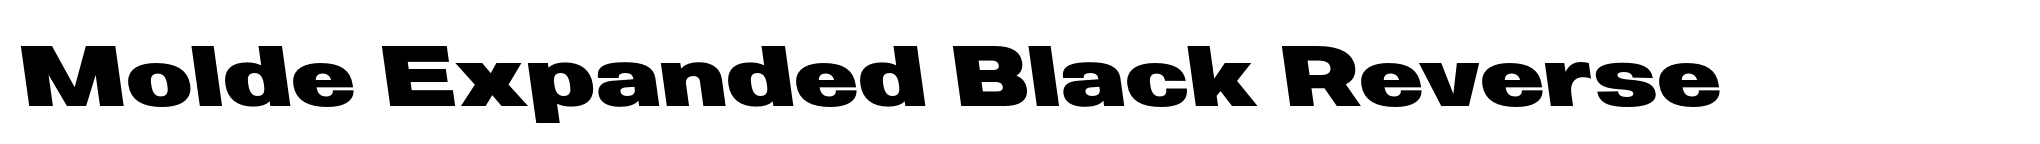 Molde Expanded Black Reverse image